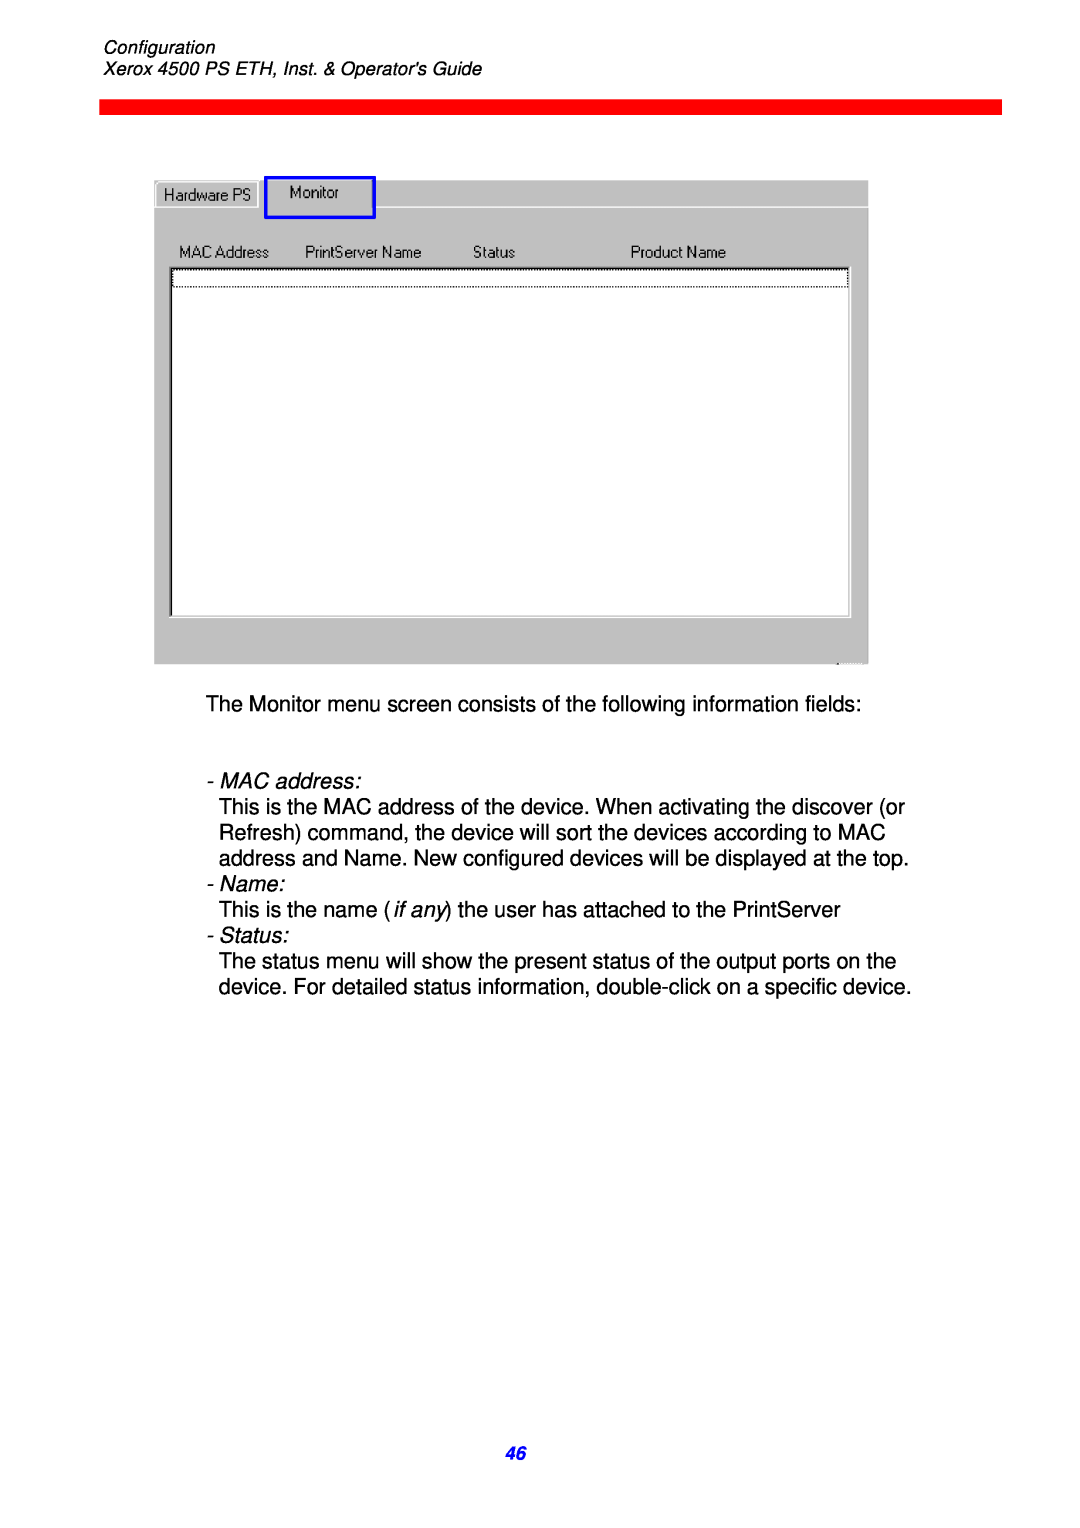 Xerox 4500 ps eth MAC address, Name, Status, The Monitor menu screen consists of the following information fields 